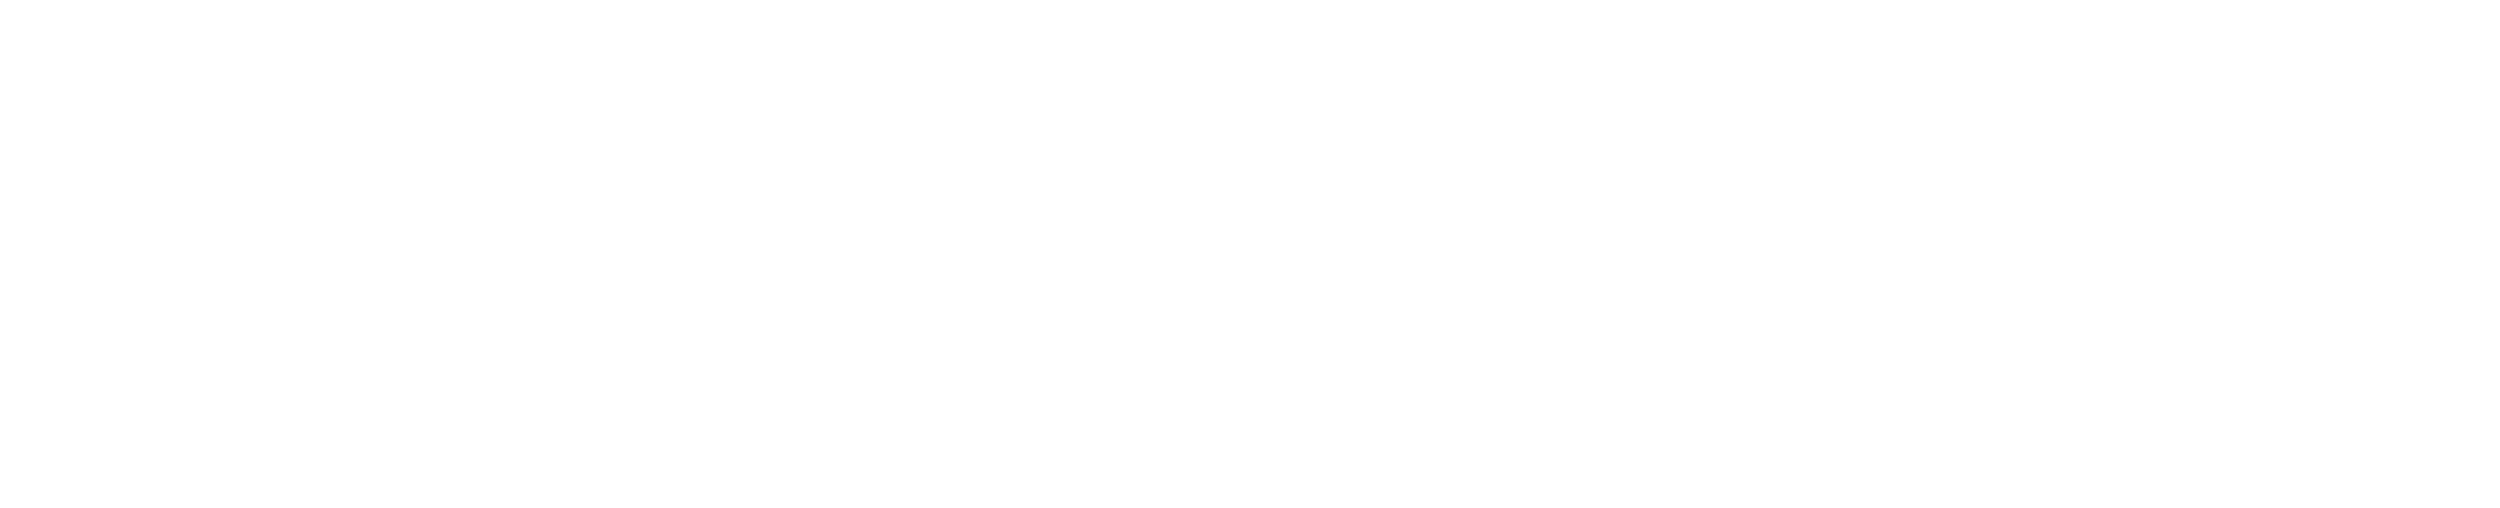 Xrayvision hompage